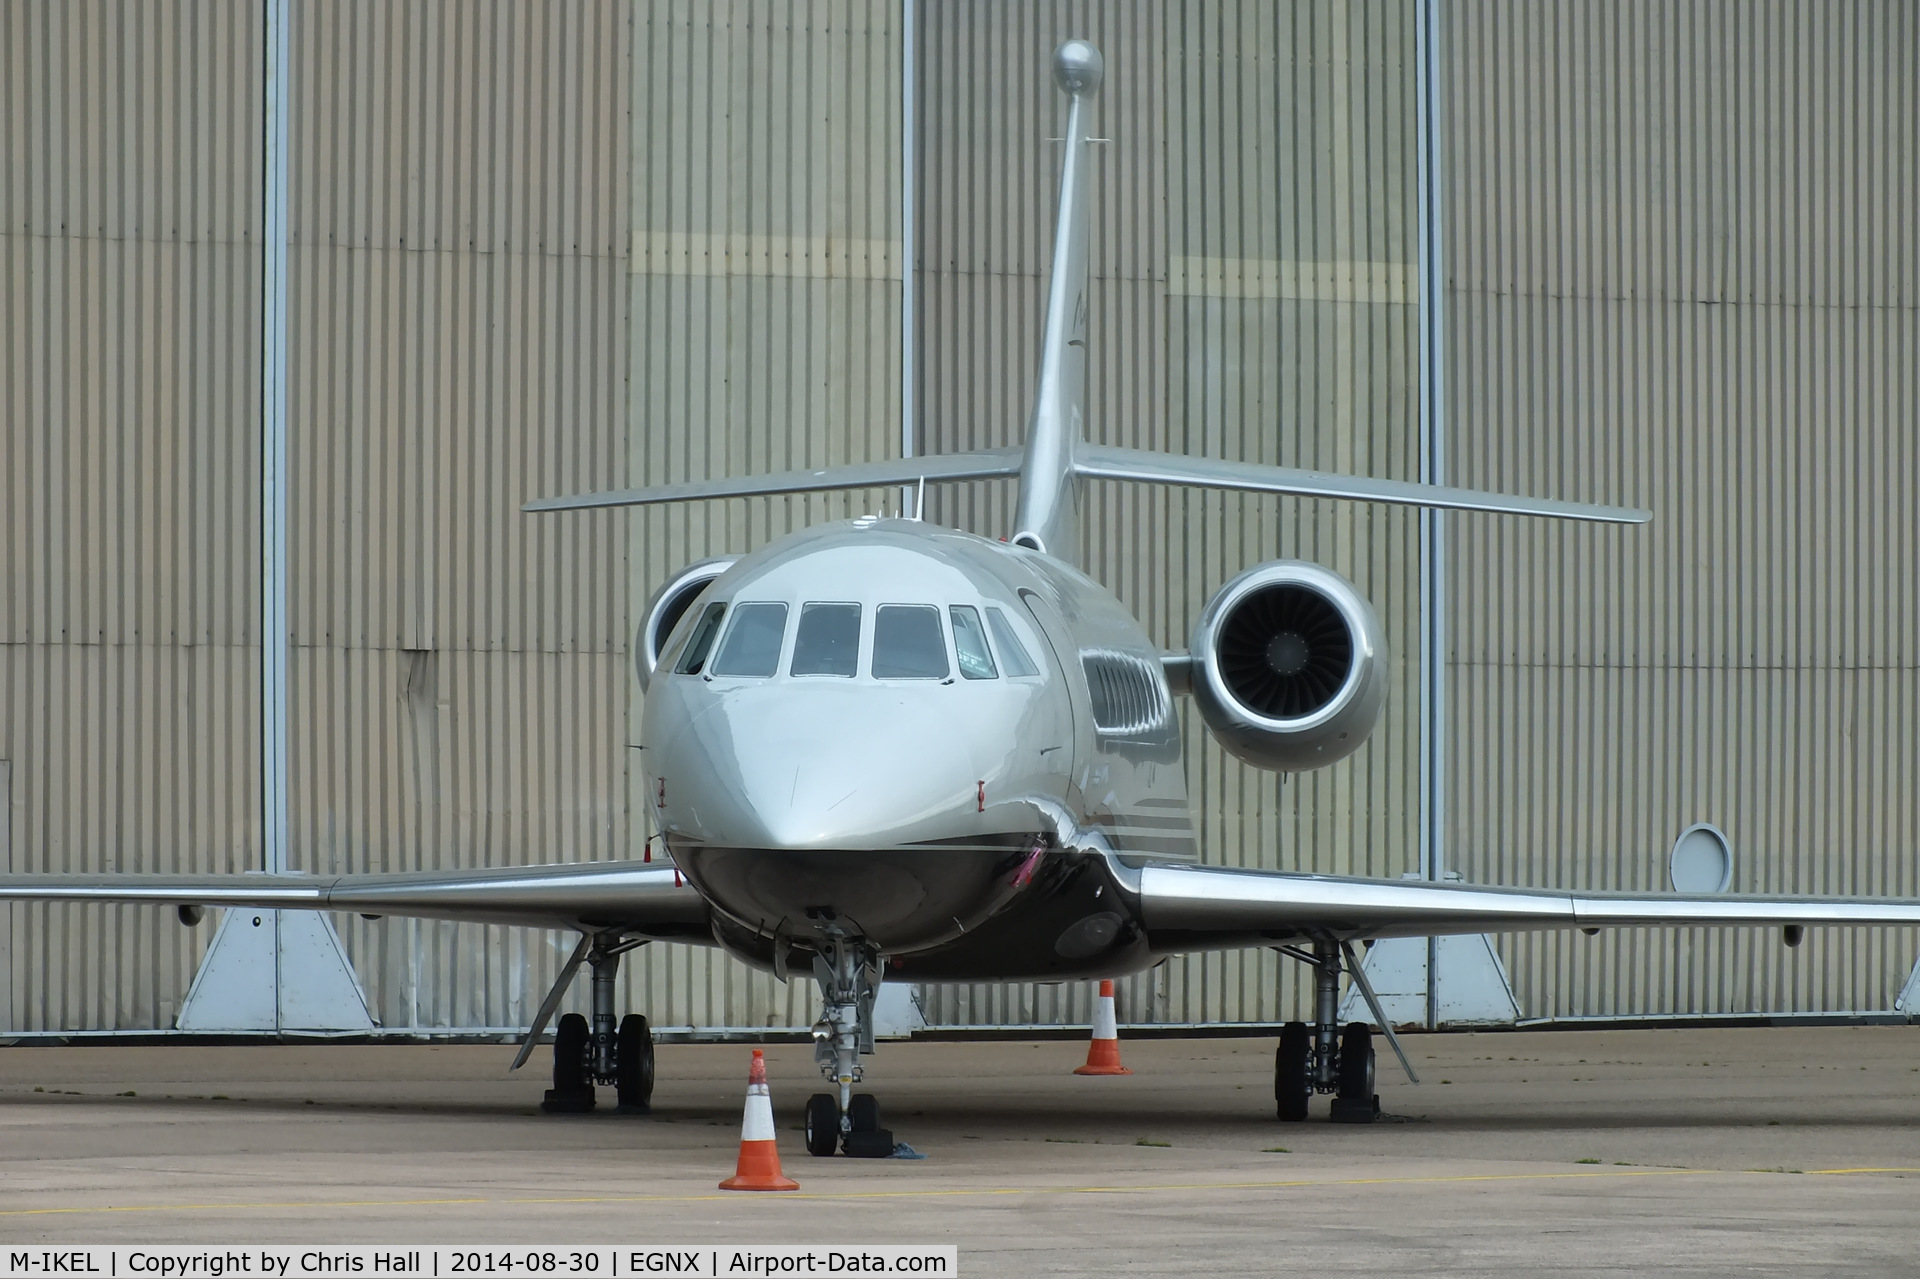 M-IKEL, 2010 Dassault Falcon 2000LX C/N 216, Michael Schumacher's private jet